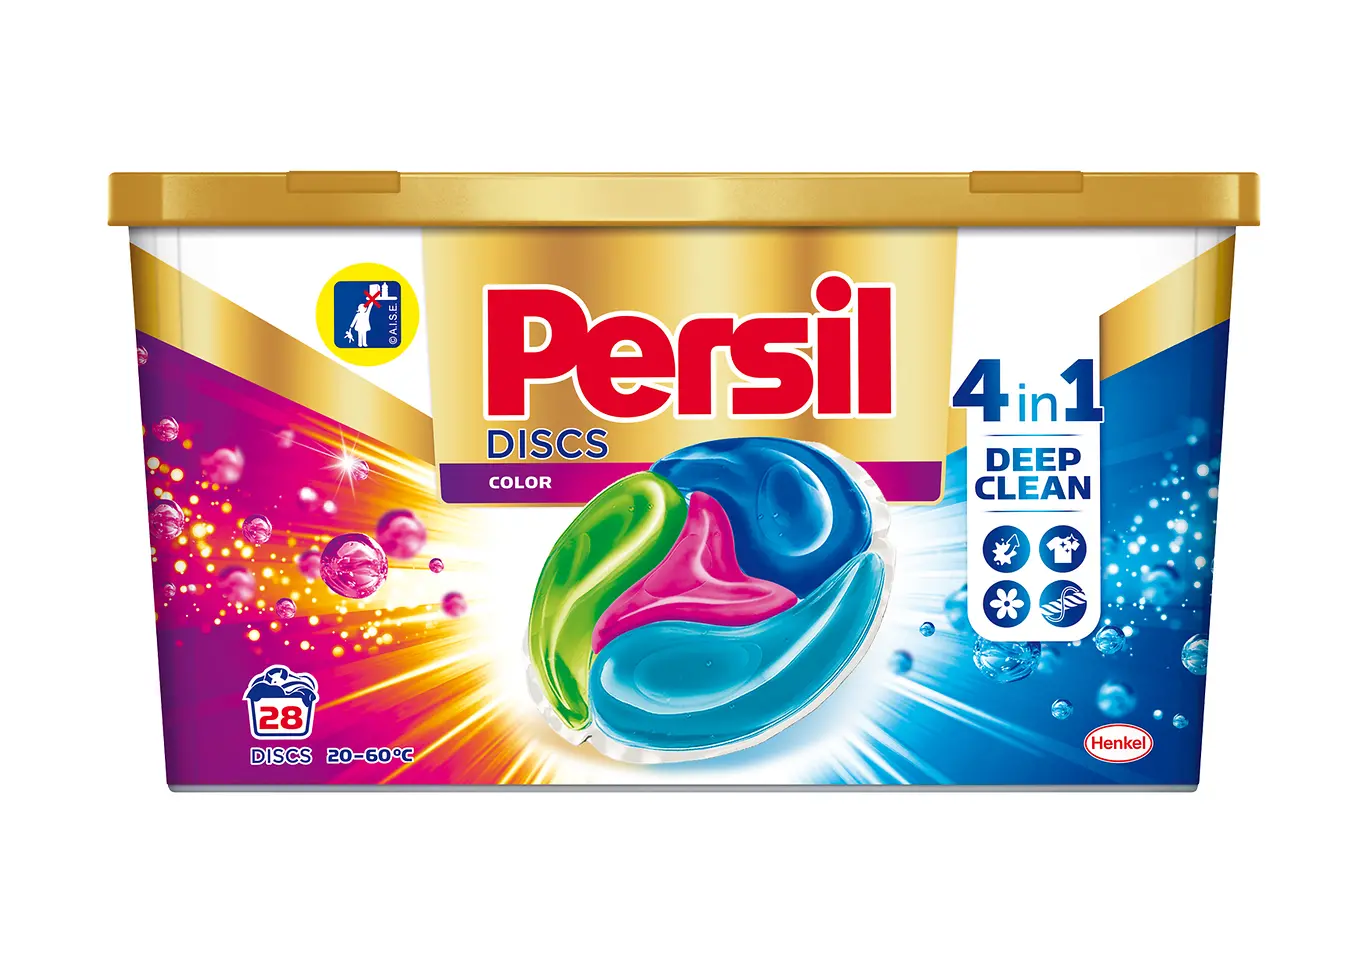 Persil Discs 4in1 Color 28 dávkami